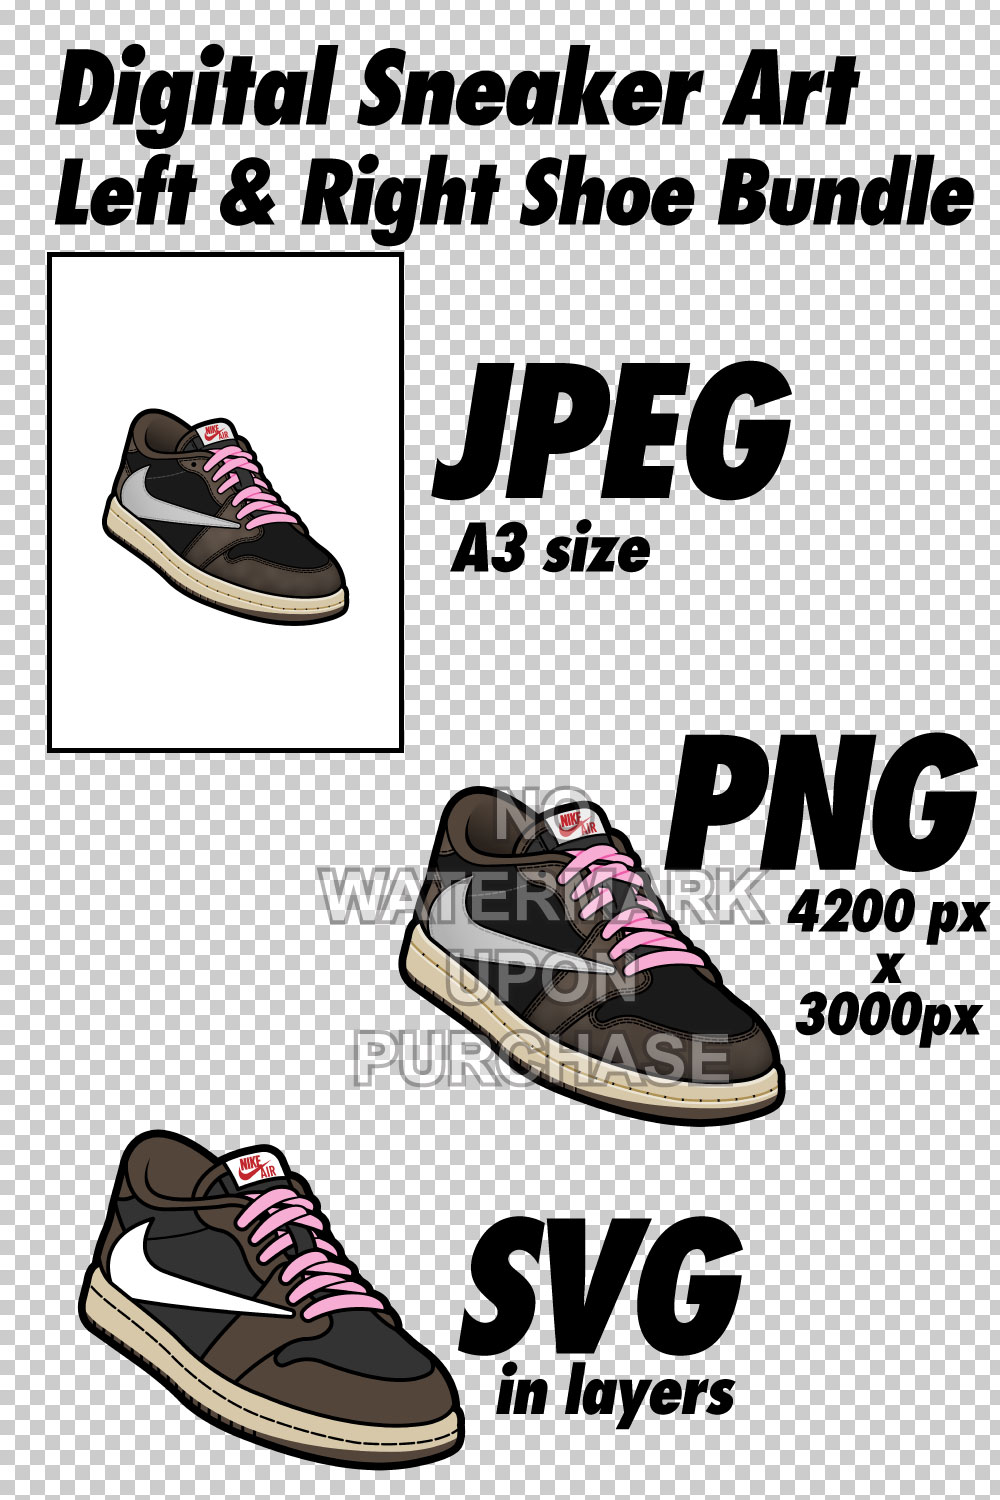 Air Jordan 1 Low Travis Scott JPEG PNG SVG Left & Right Shoe digital download pinterest preview image.